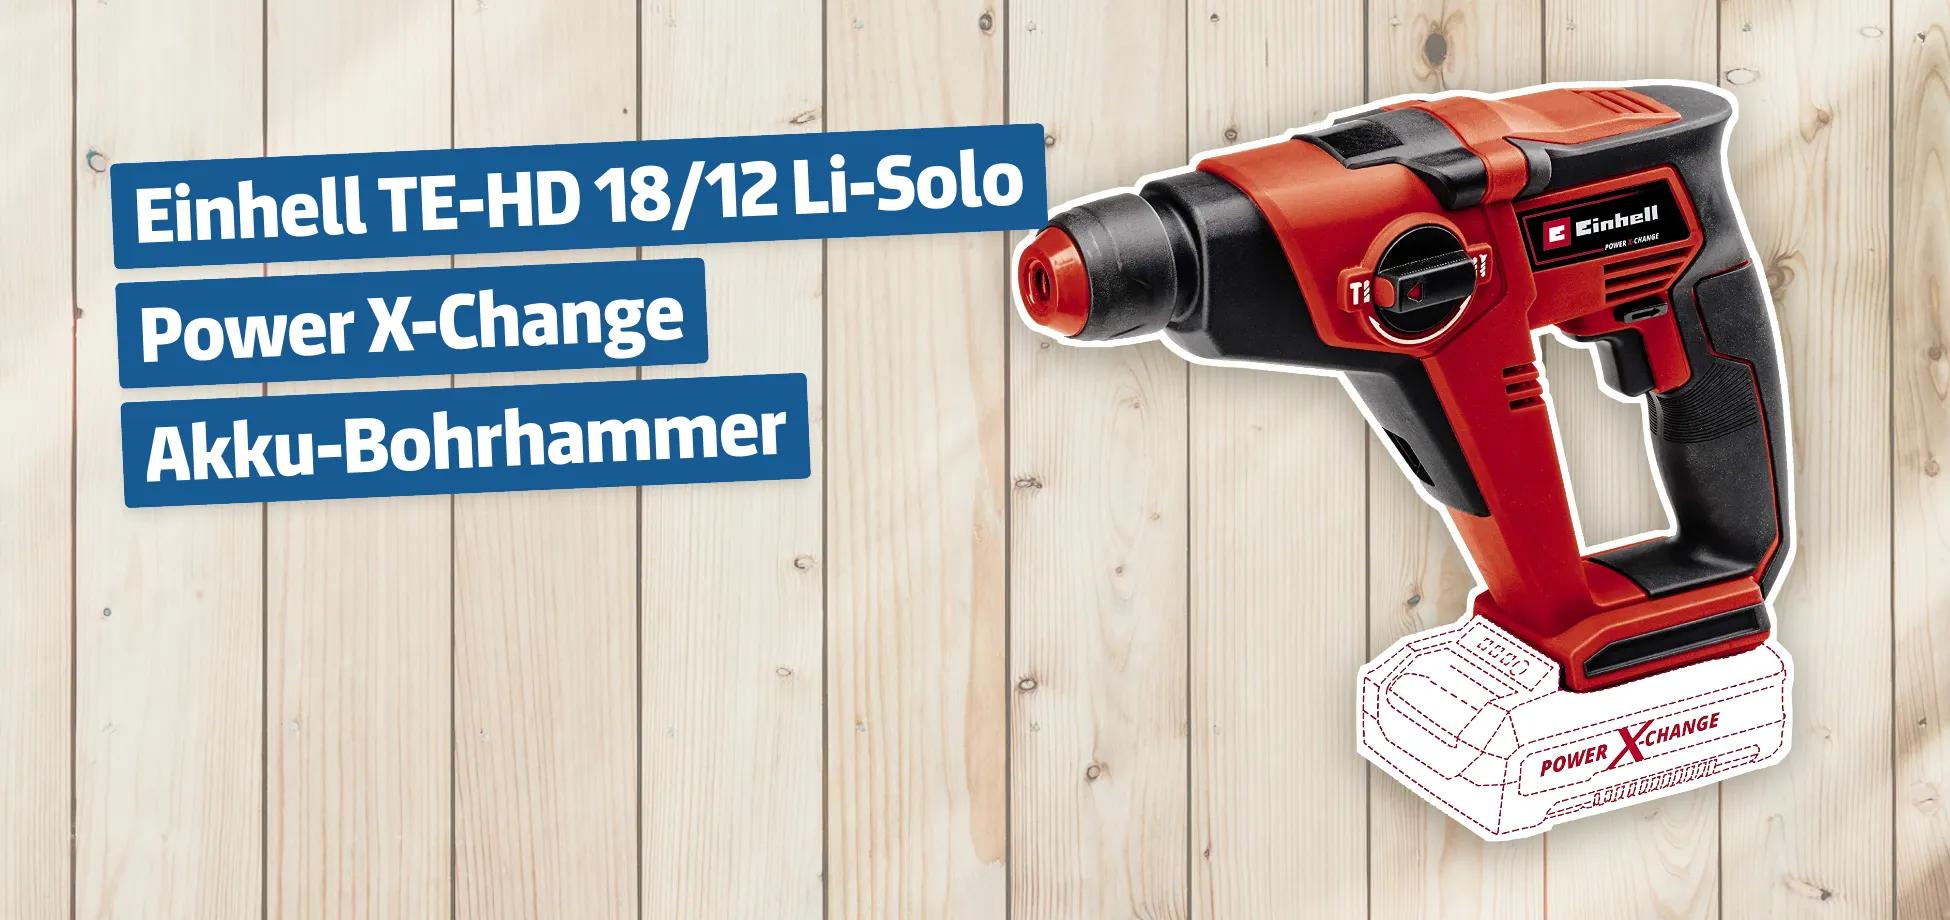 Einhell TE-HD 18/12 Li-Solo Power X-Change Akku-Bohrhammer